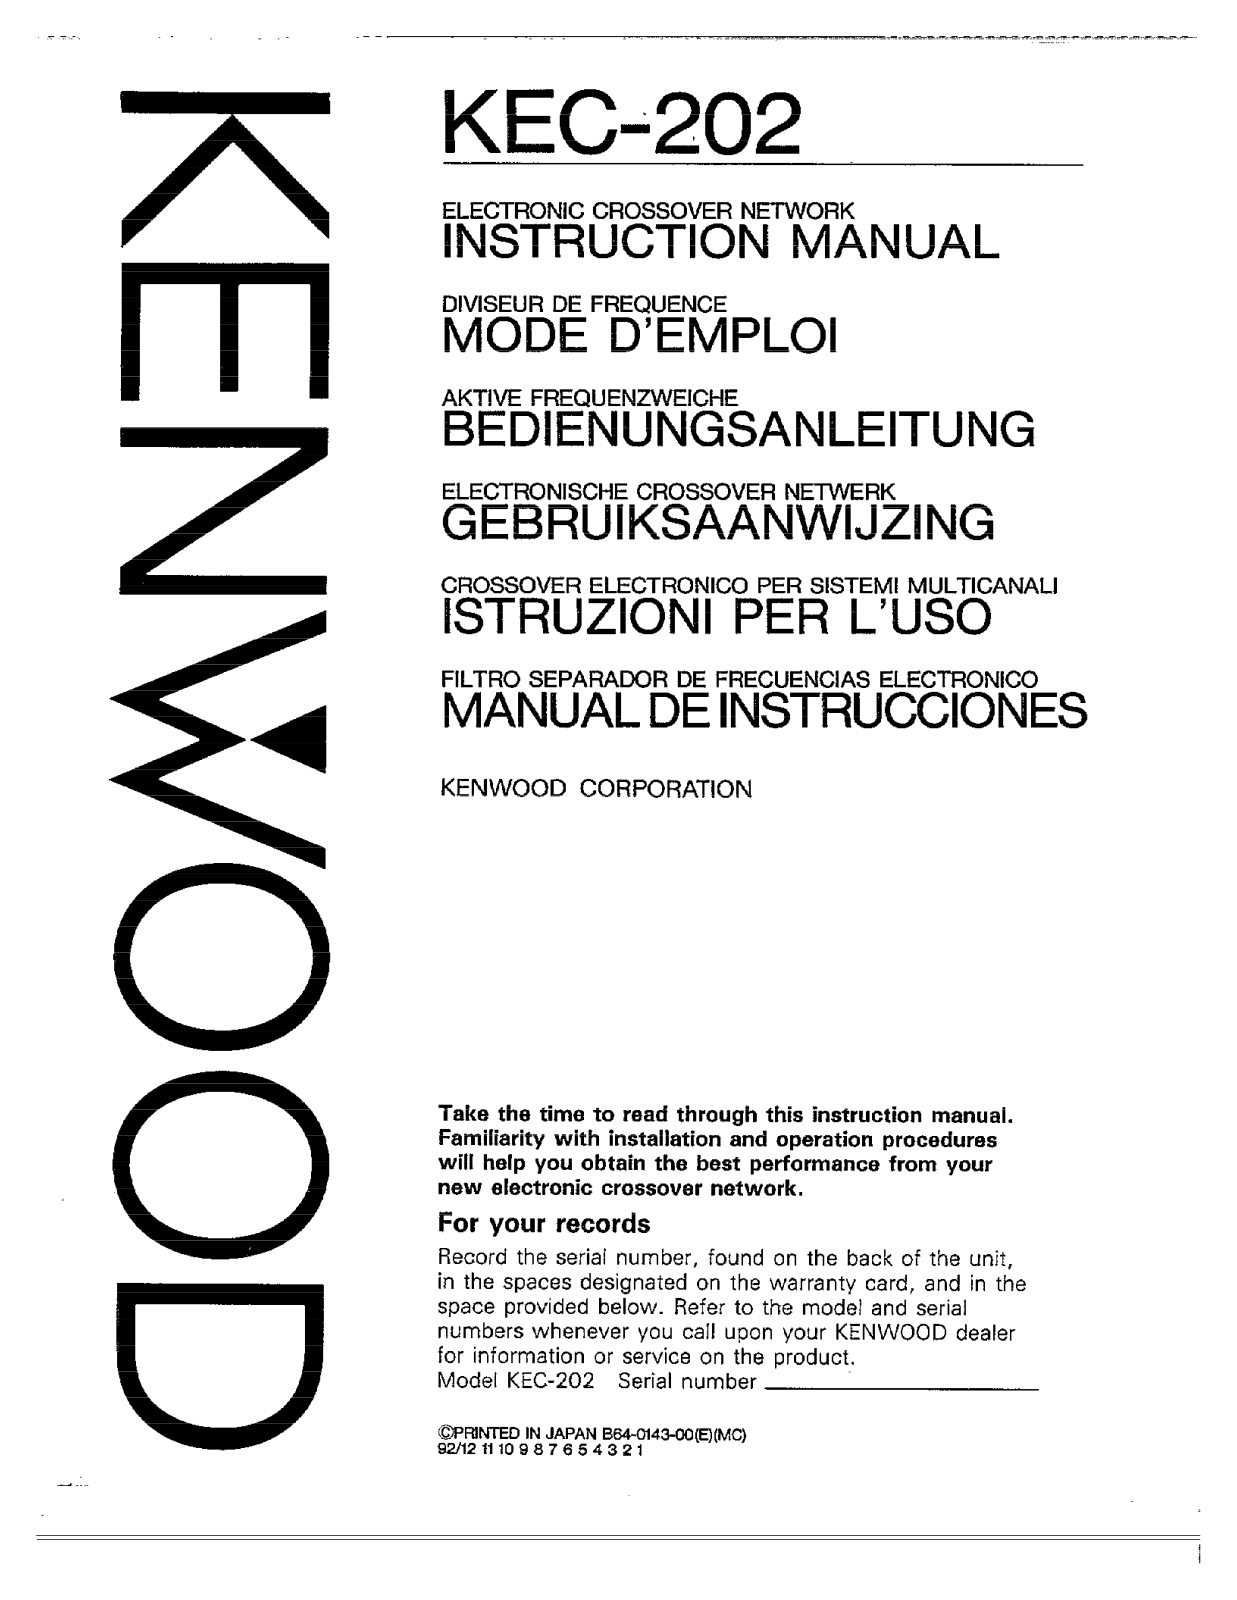 Kenwood KEC-202 Owner's Manual